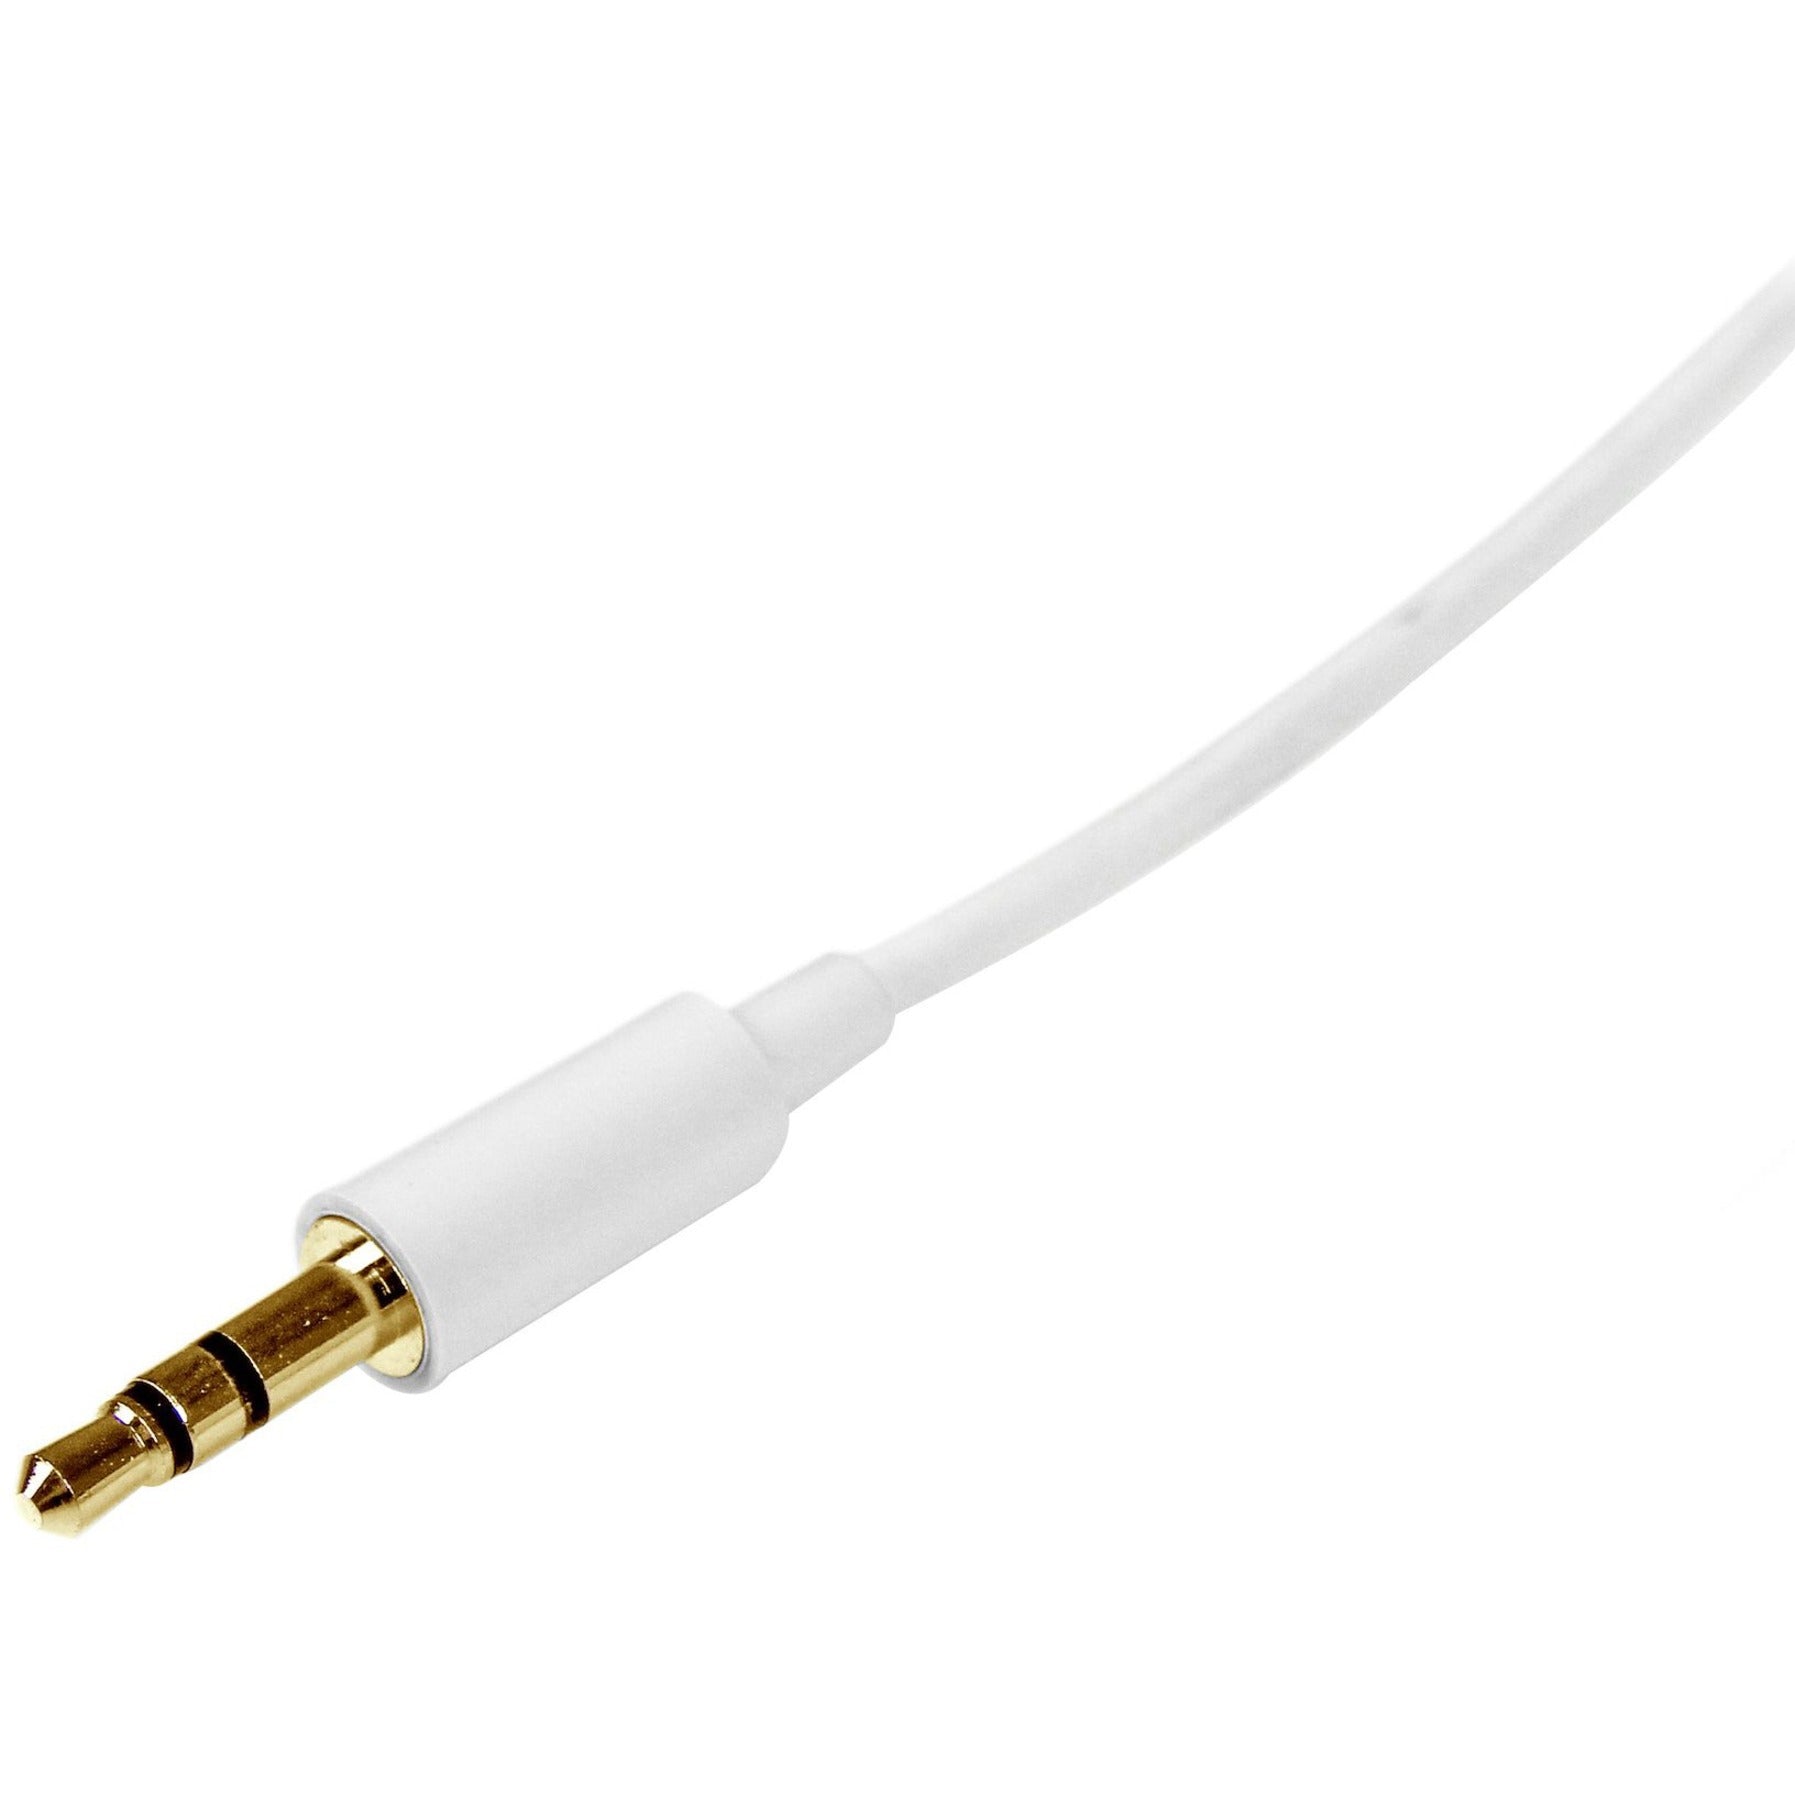 StarTech.com MU3MMMSWH 3m White Slim 3.5mm Stereo Audio Cable - Male to Male Molded Copper Conductor 9.84 ft Length スタートゥック・ドットコム MU3MMMSWH 3m ホワイト スリム 3.5ミリメートル ステレオ オーディオ ケーブル - メス トゥ メス モールデッド 銅導体 9.84 フィート 長さ